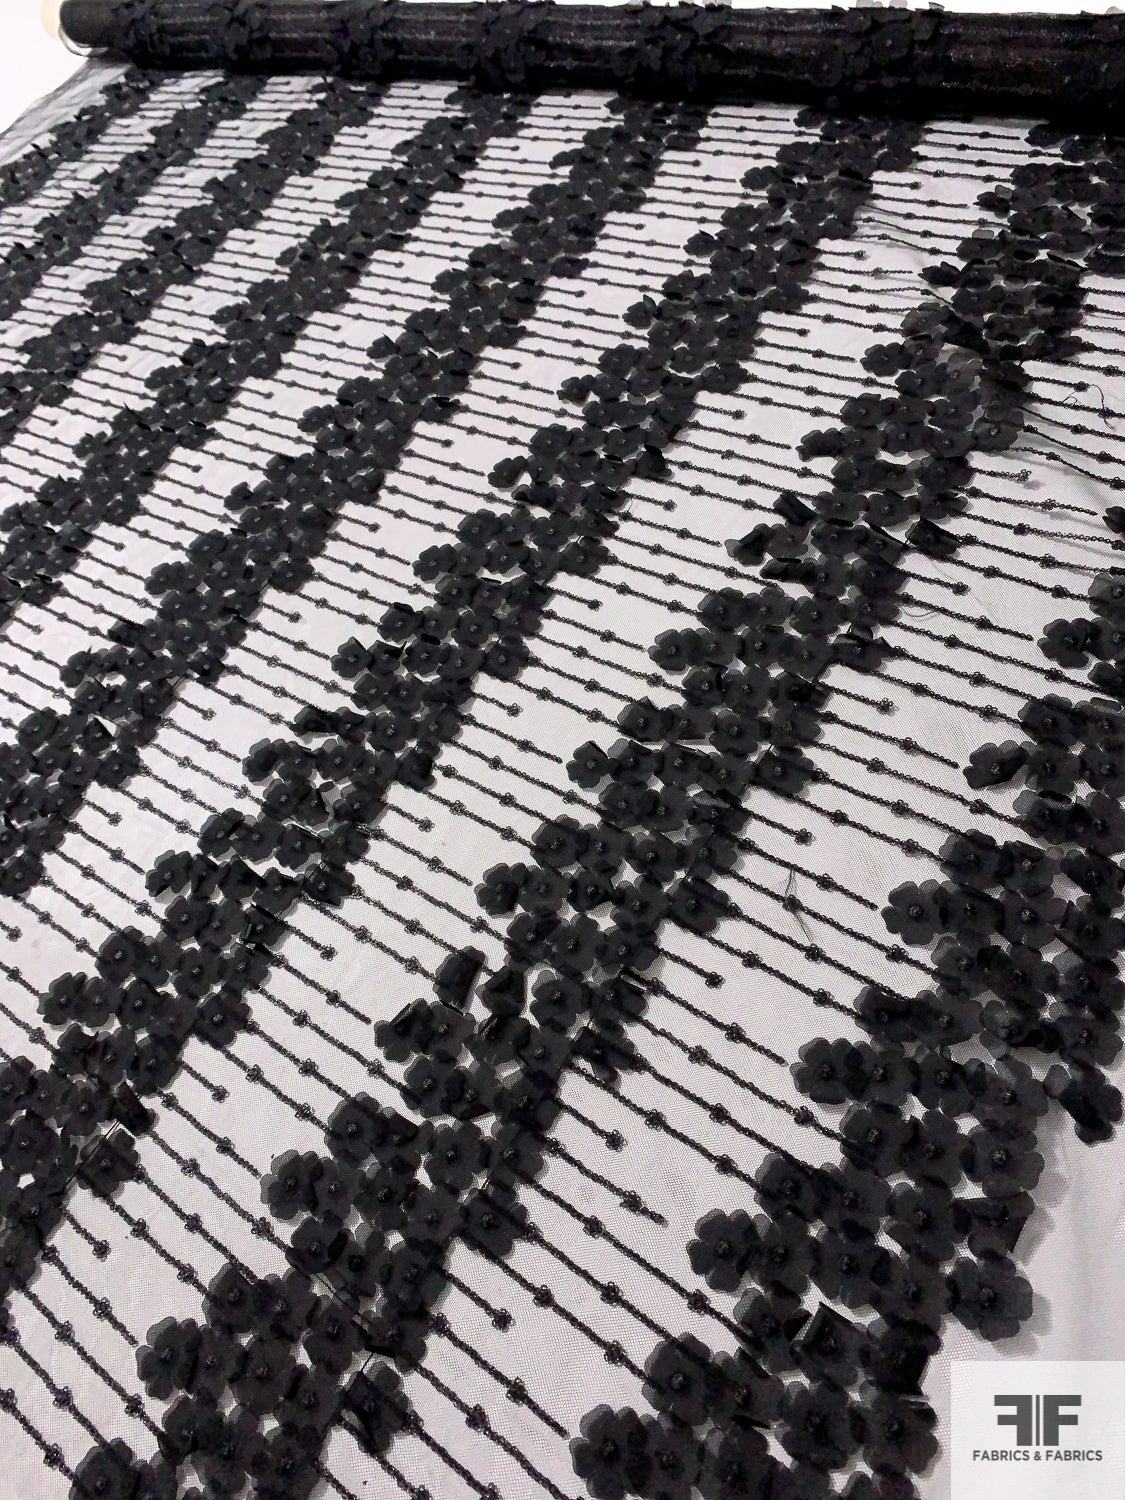 Fine Netting with 3D Floral Chiffon Appliqués and Sequins Detailing - Black